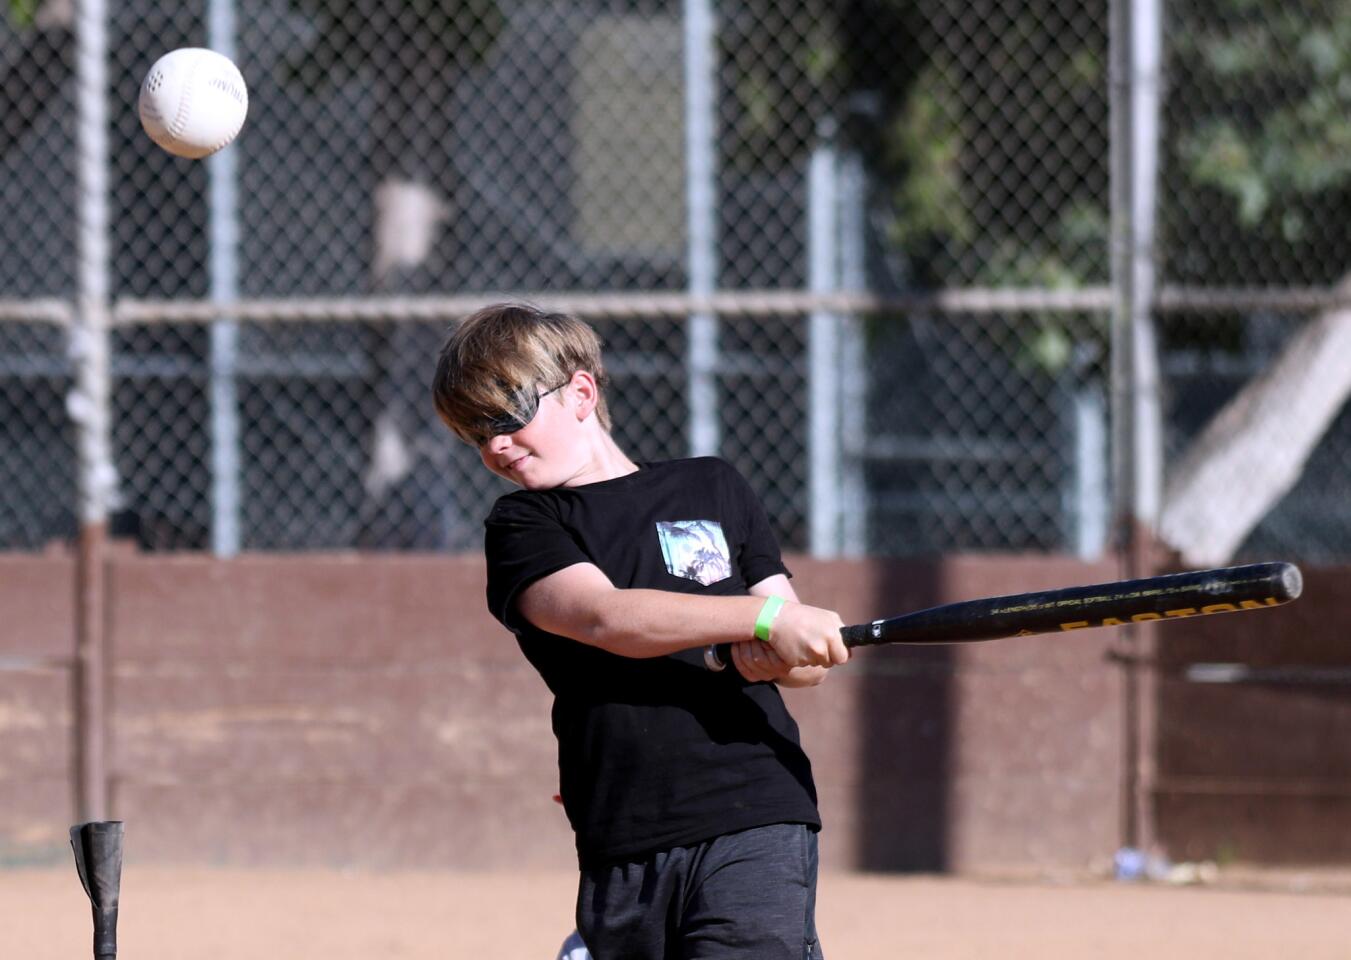 Photo Gallery: Beep baseball comes to Pasadena